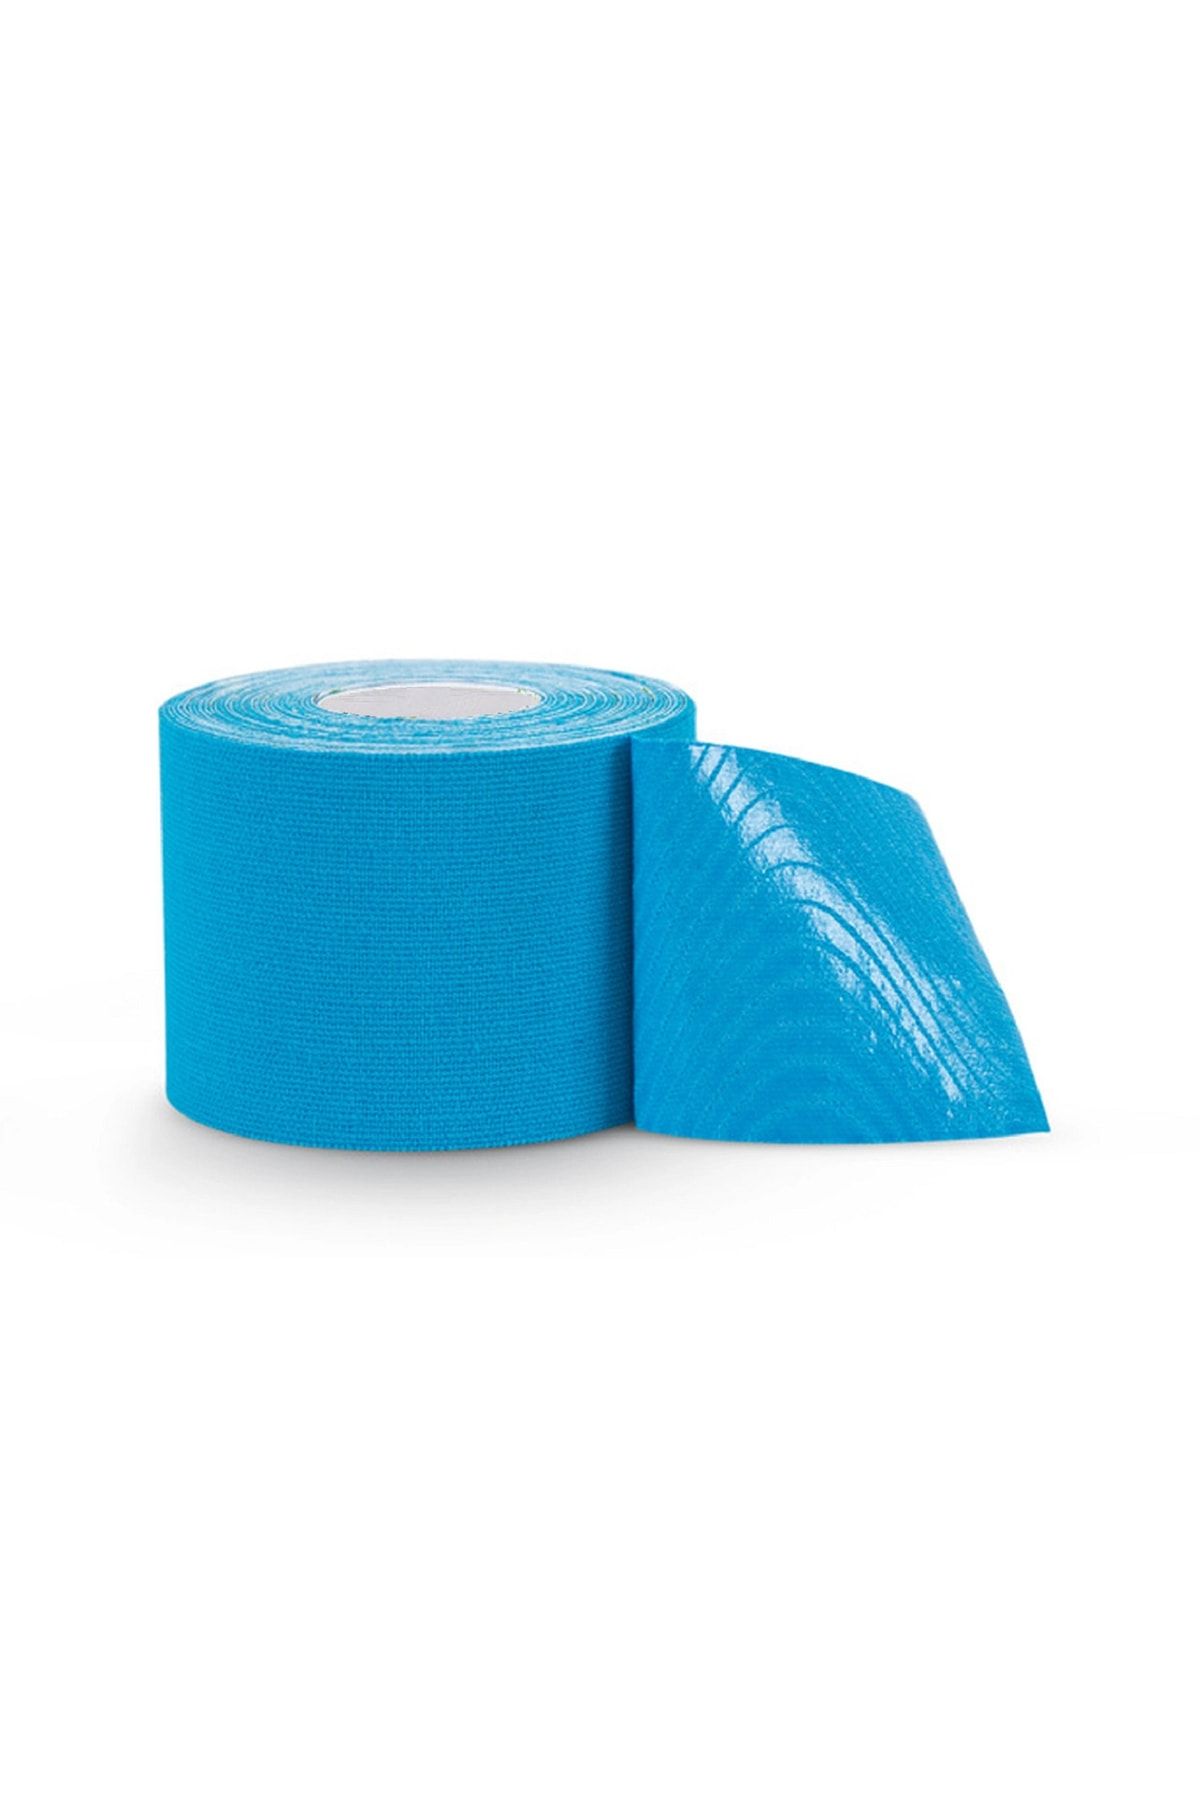 Life Care Kinesio Tape Mavi 5 cm X 5 mt Ağrı Bandı Mavi